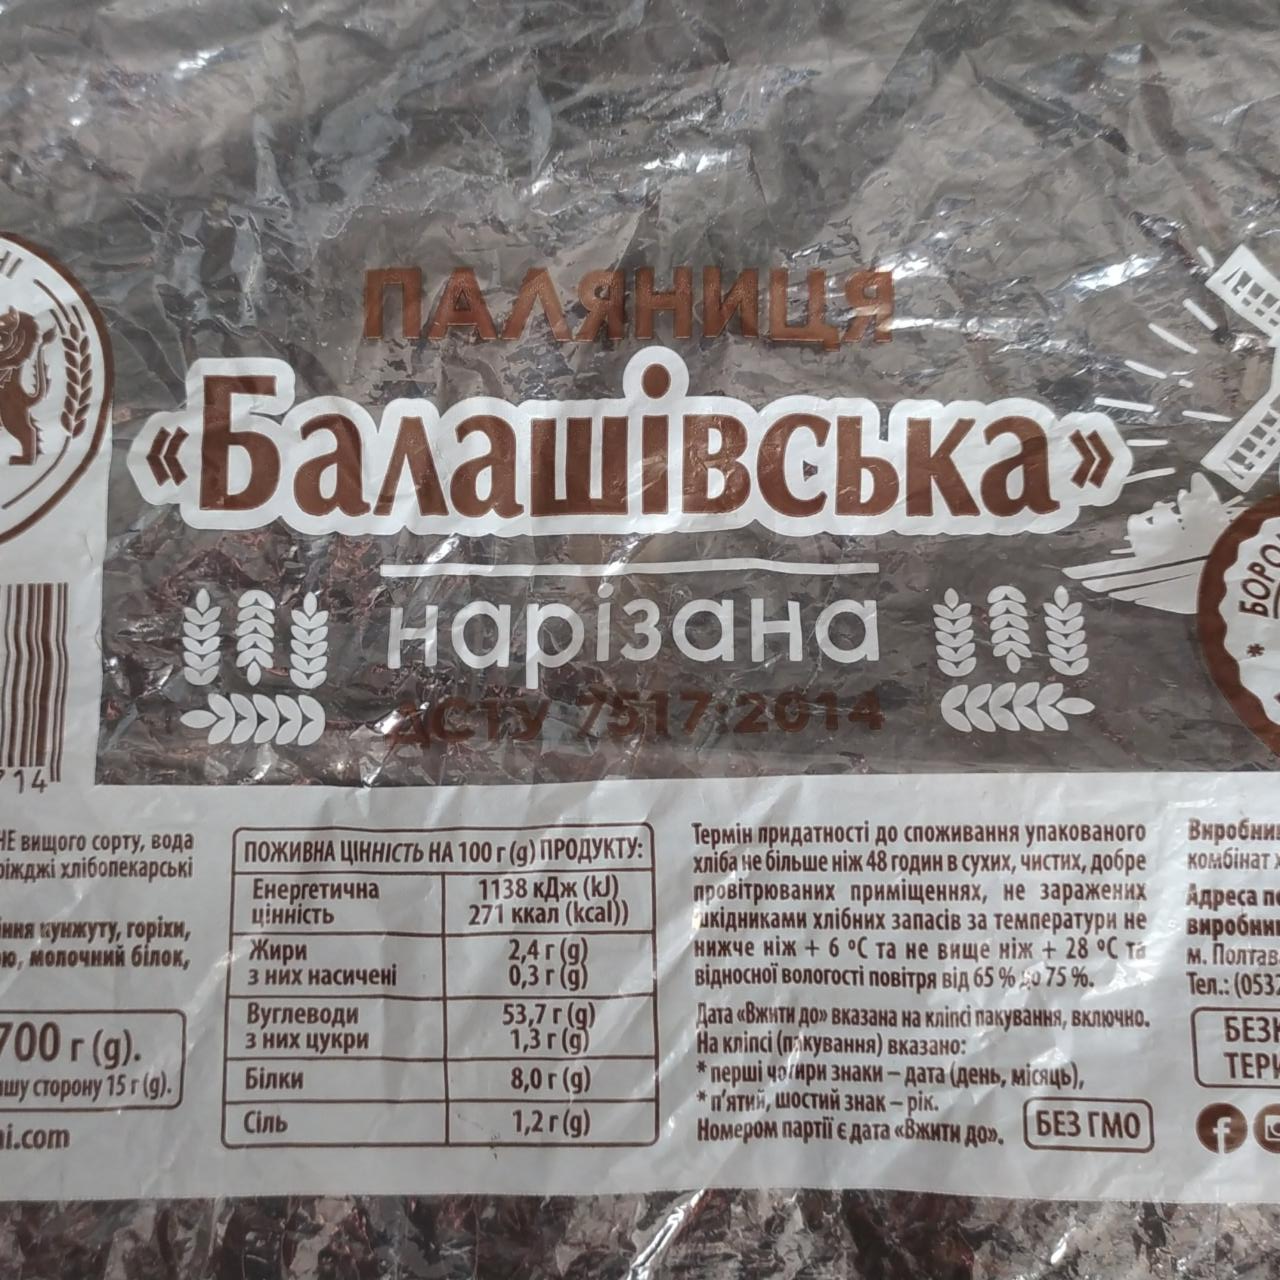 Фото - хлеб нарезаный балашивский Кулиничи